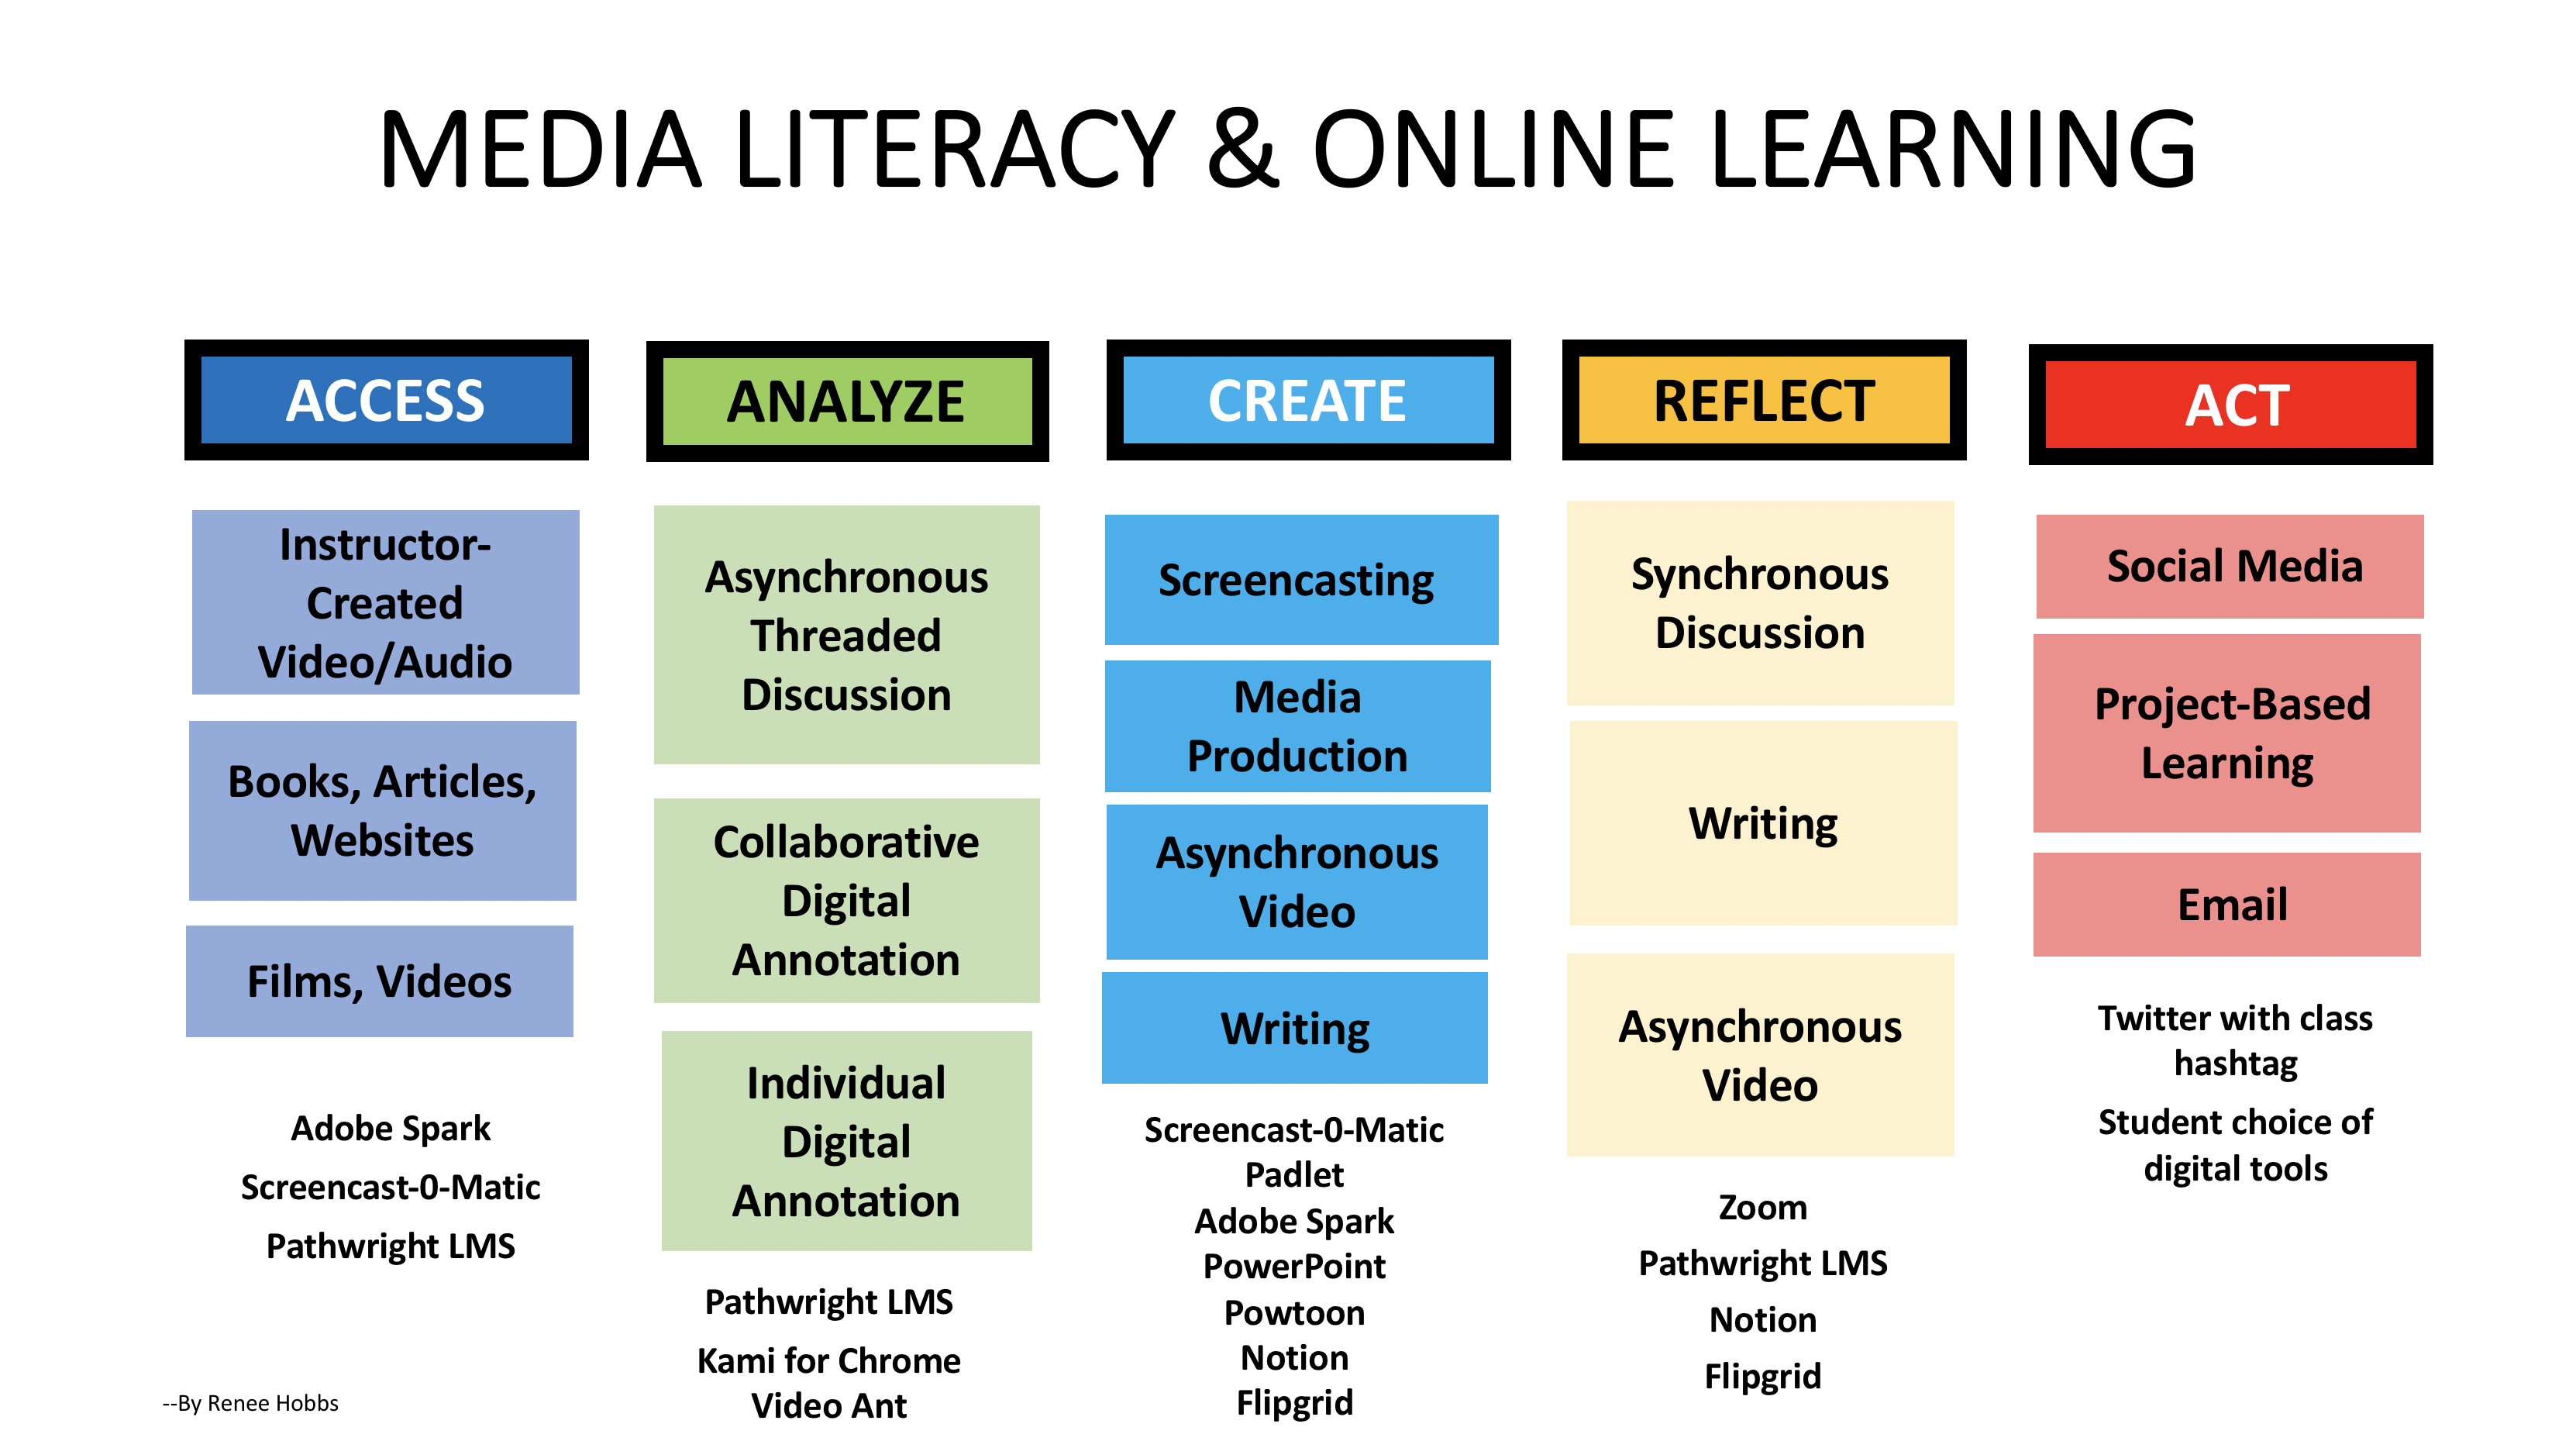 Online Learning & Media Literacy | Renee Hobbs at the Media Education Lab